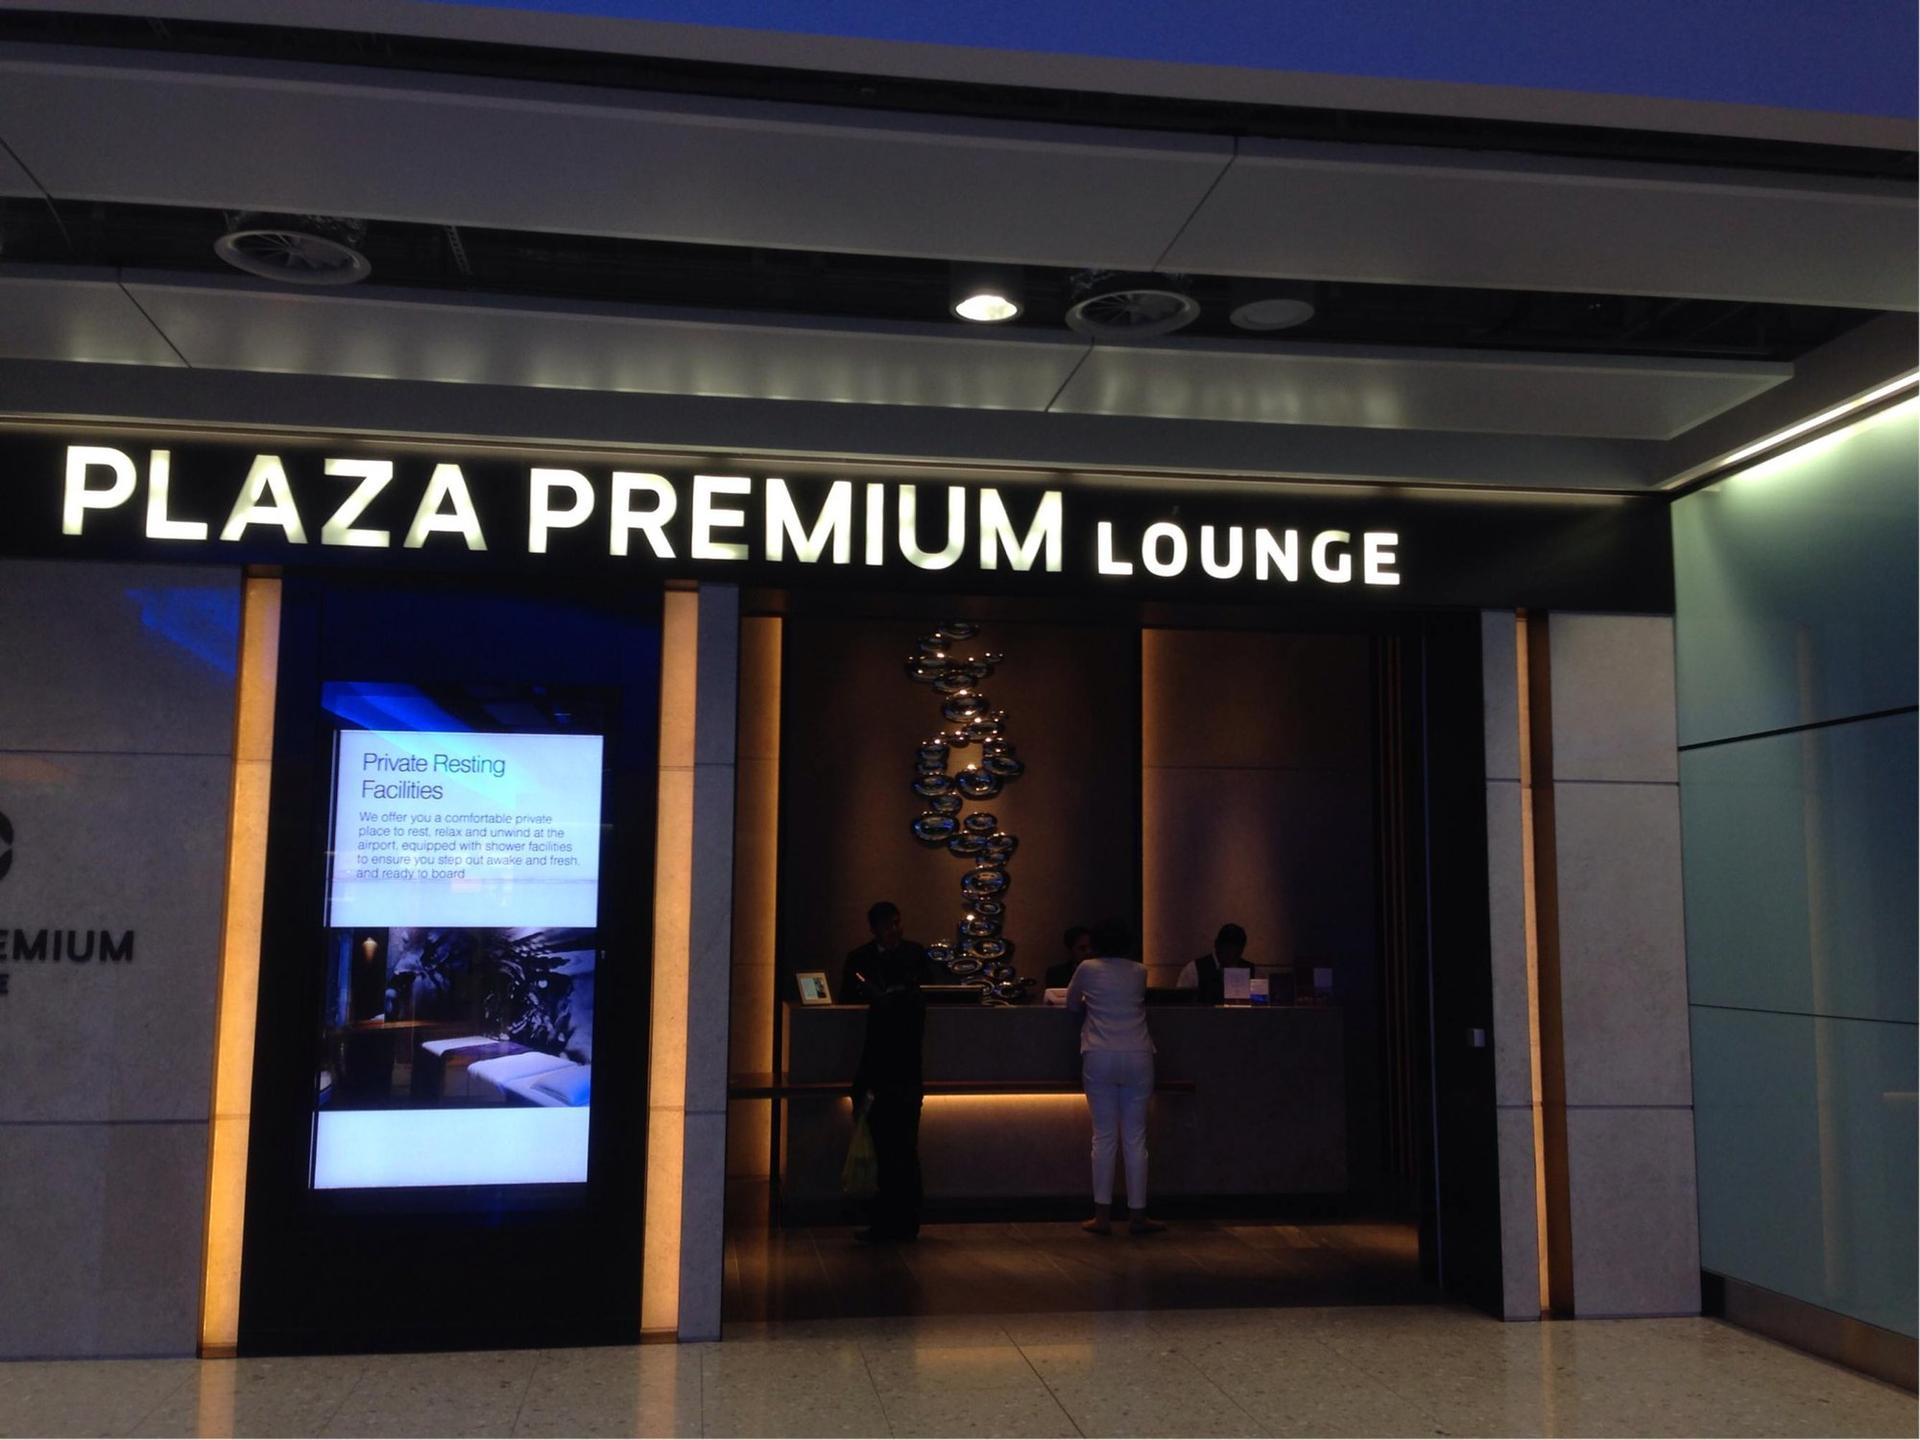 Plaza Premium Lounge image 20 of 73